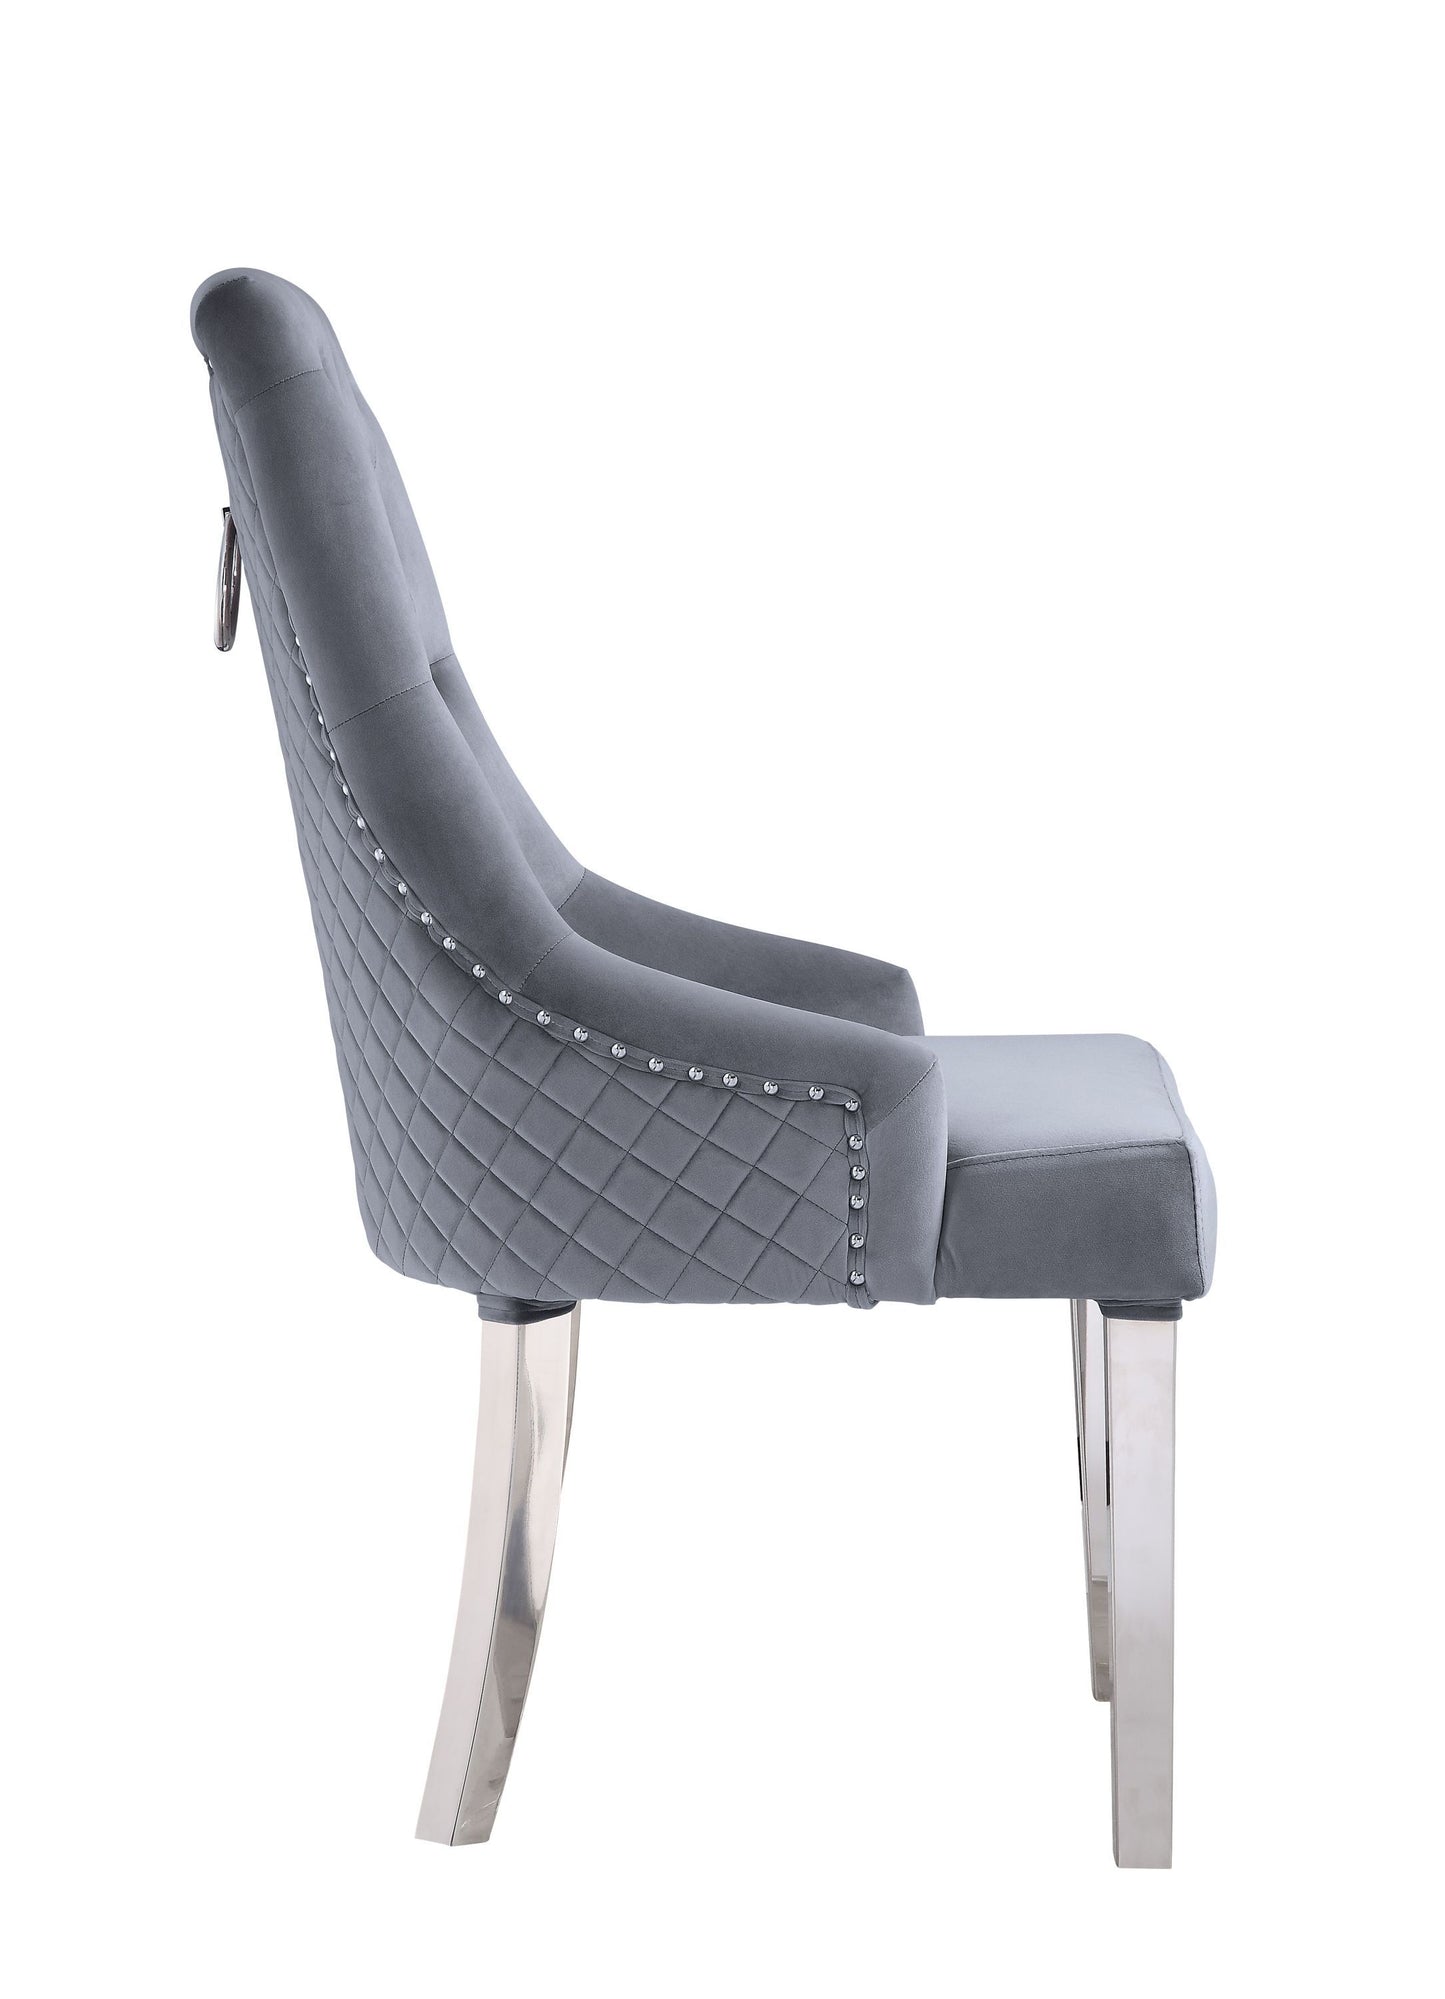 ACME Satinka Side Chair, Gray Fabric & Mirrored Silver Finish